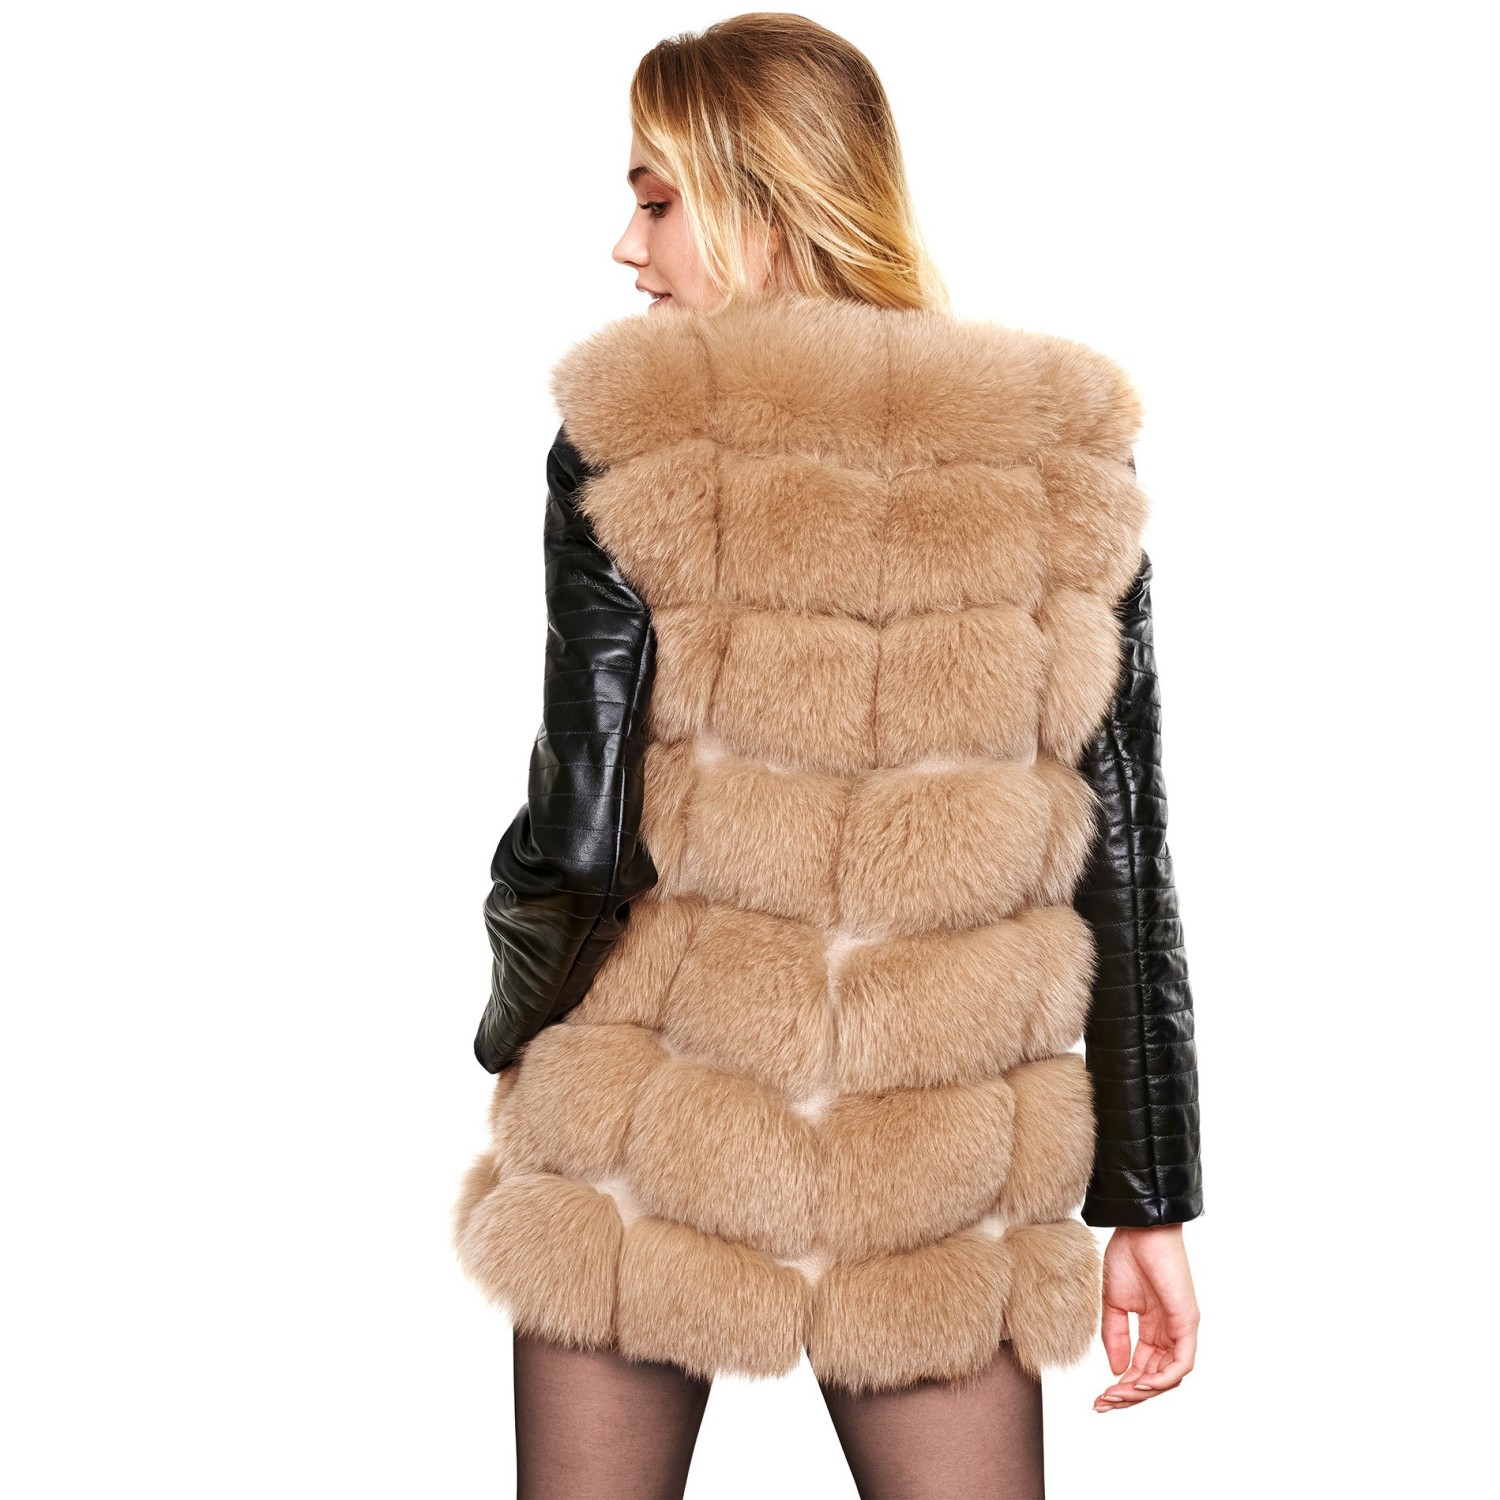 Fur Jacket with leather sleeves "VOGUE", Ladiesvest, Girlsjacket, Furvest, Furjacket